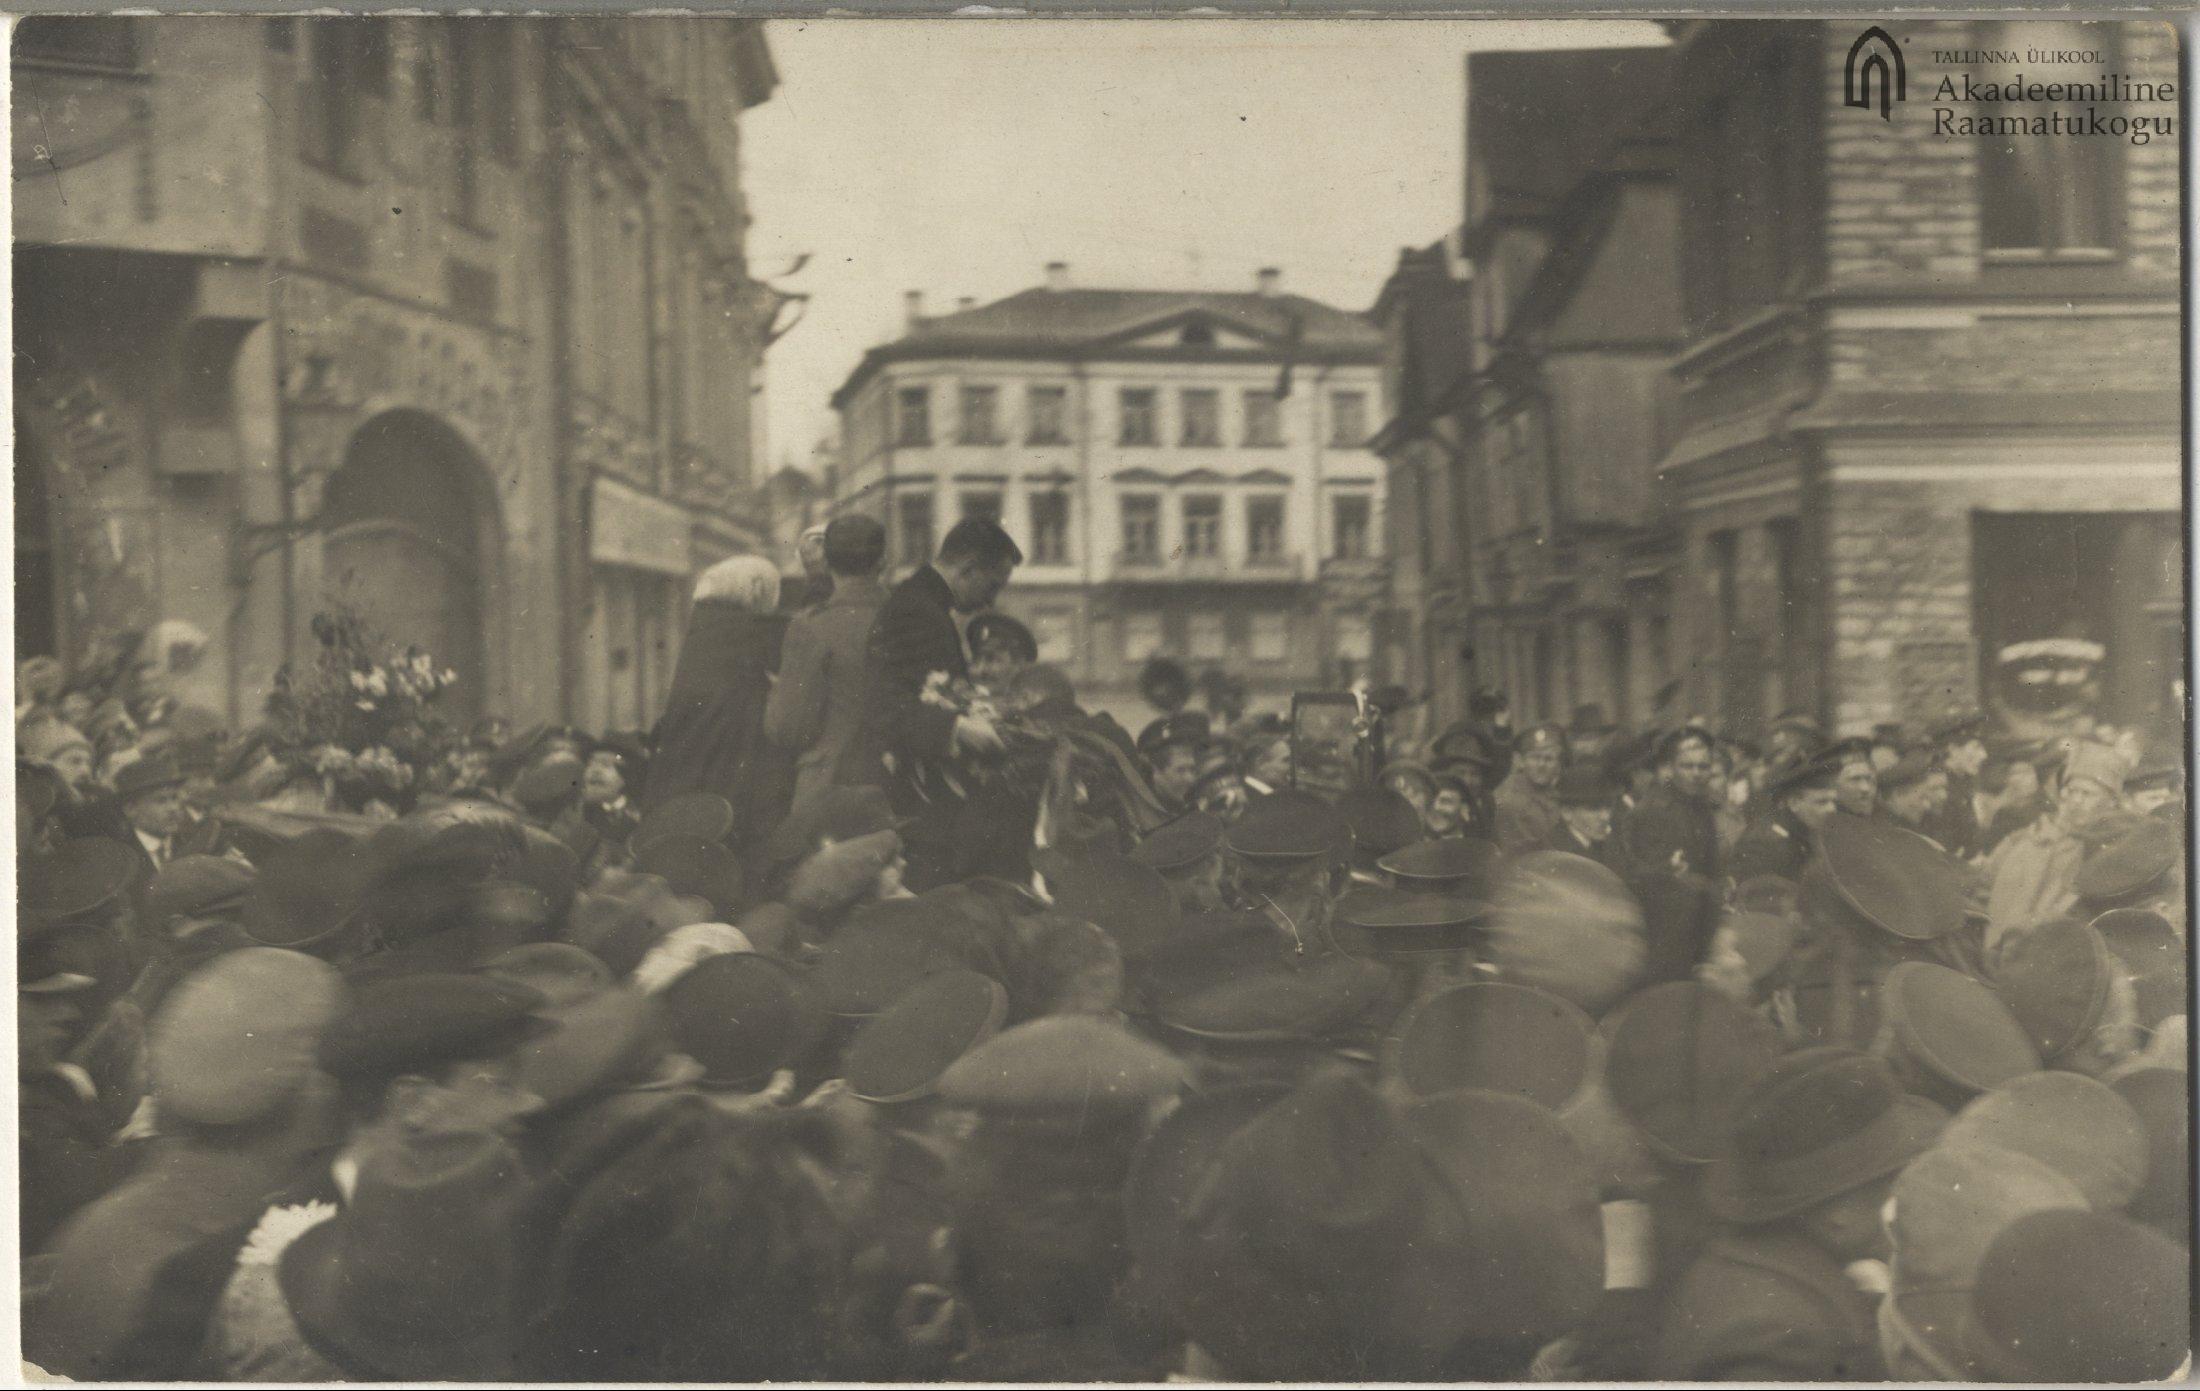 Tallinn. Aleksandr Kerenski visit 22.04.1917